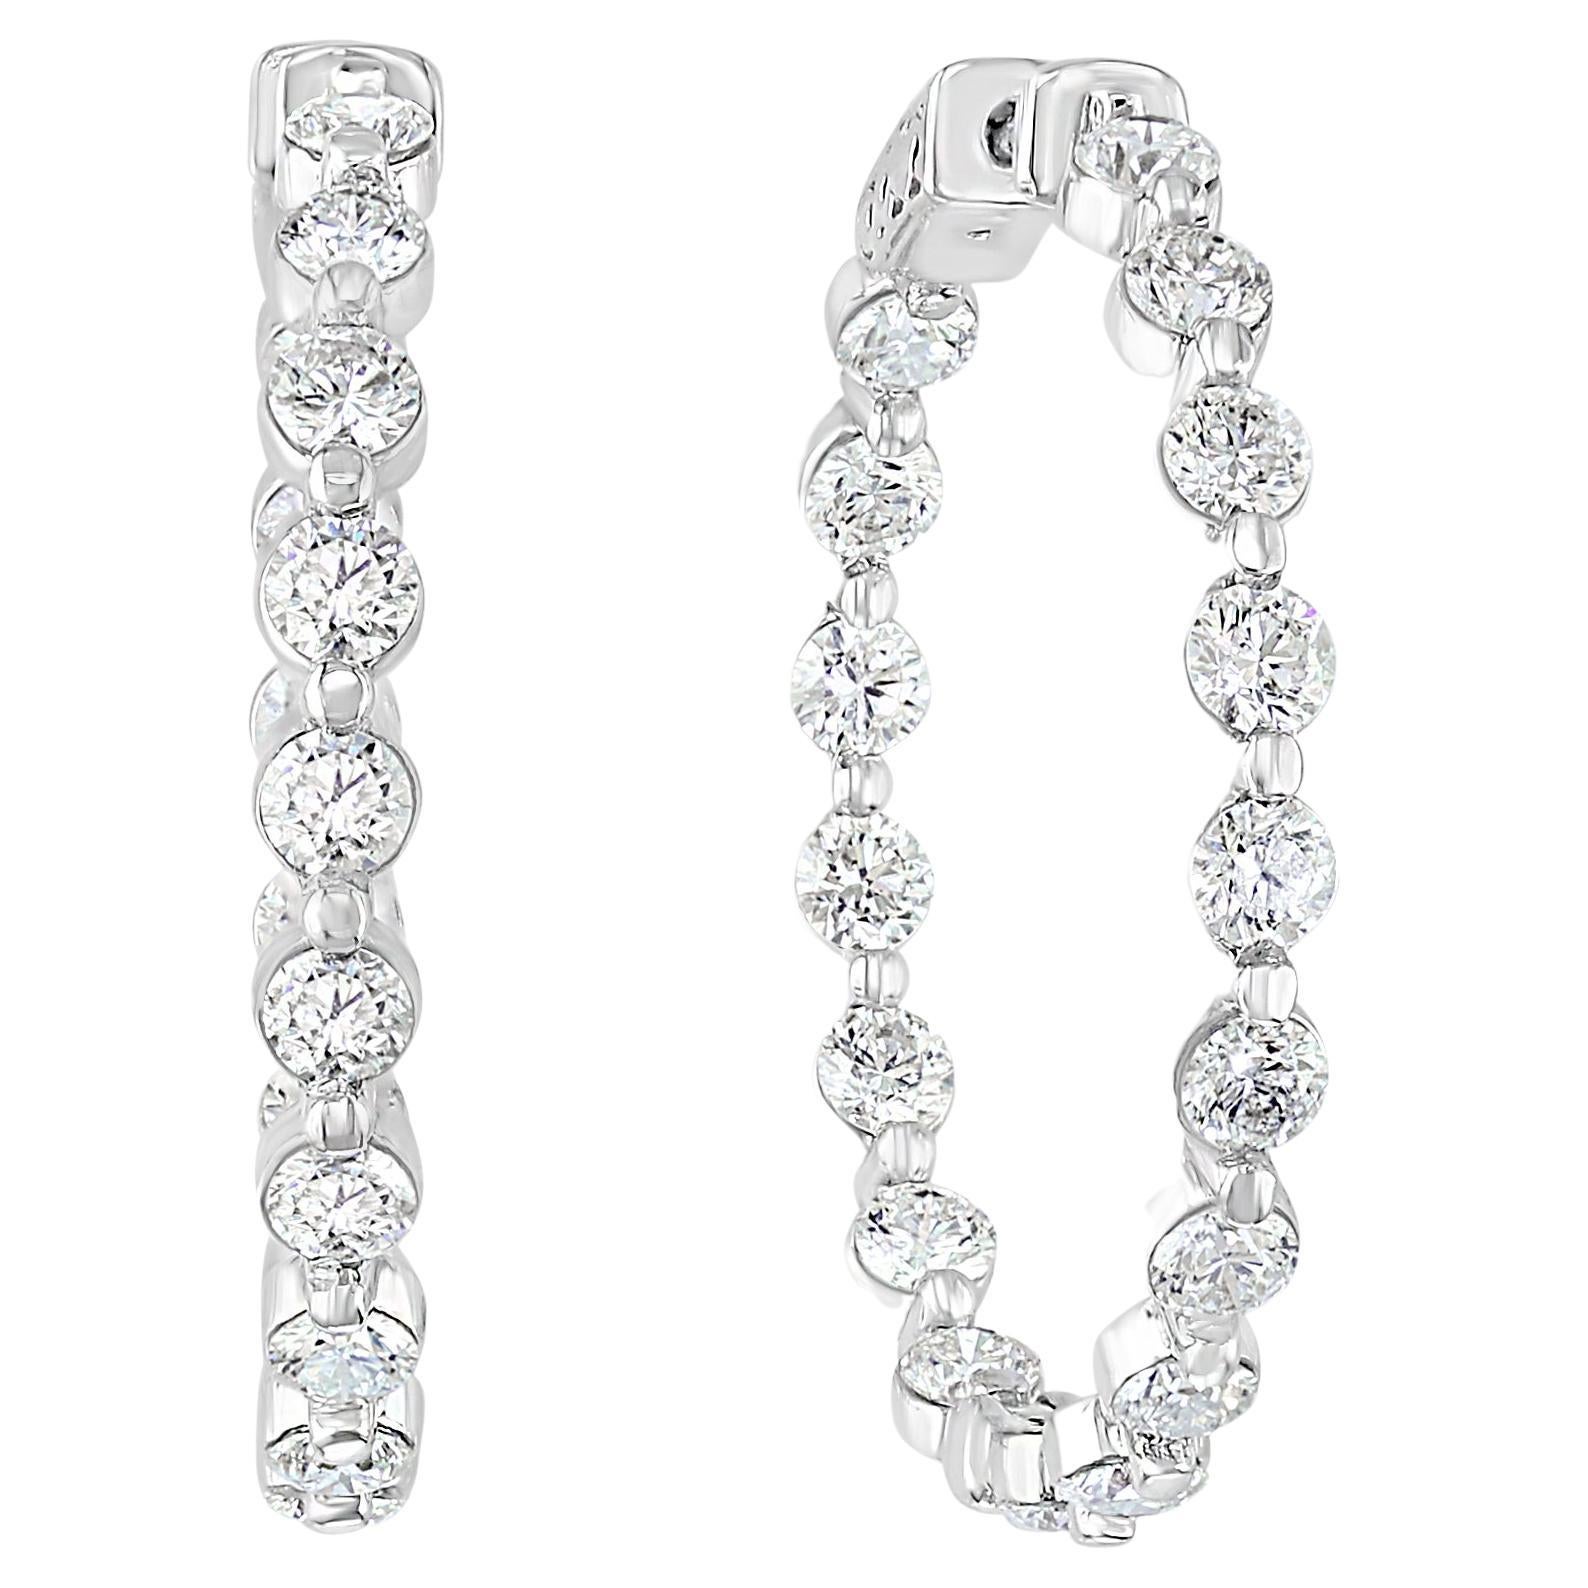 2.01 Carat Total Round Diamond Hoop Earrings in 14K White Gold